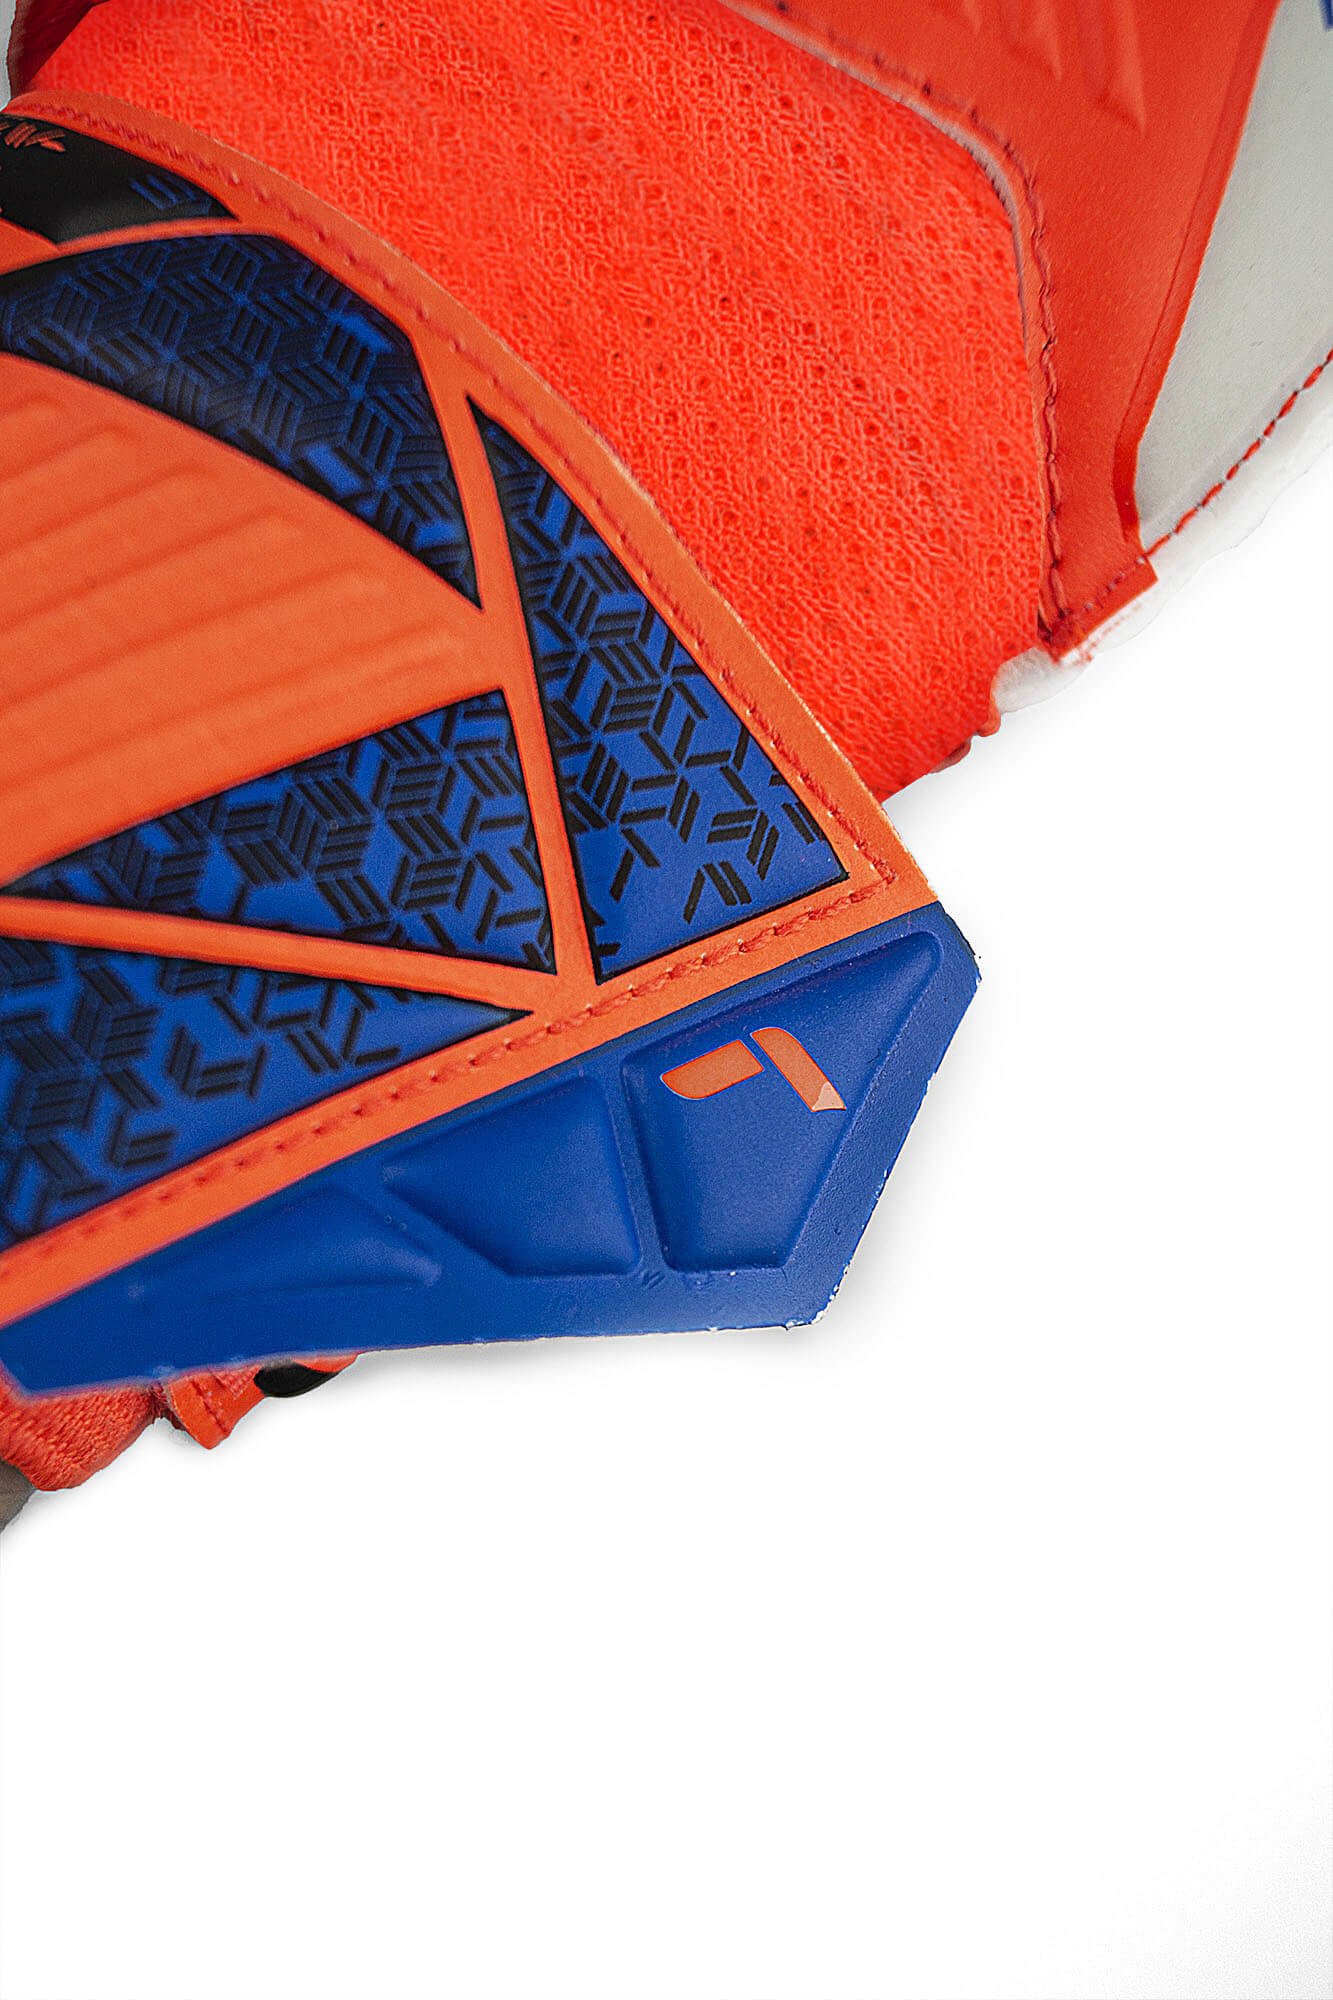 Reusch JR Attrakt Solid FS Goalkeeper Glove Hyper Orange Electric Blue (Detail 3)